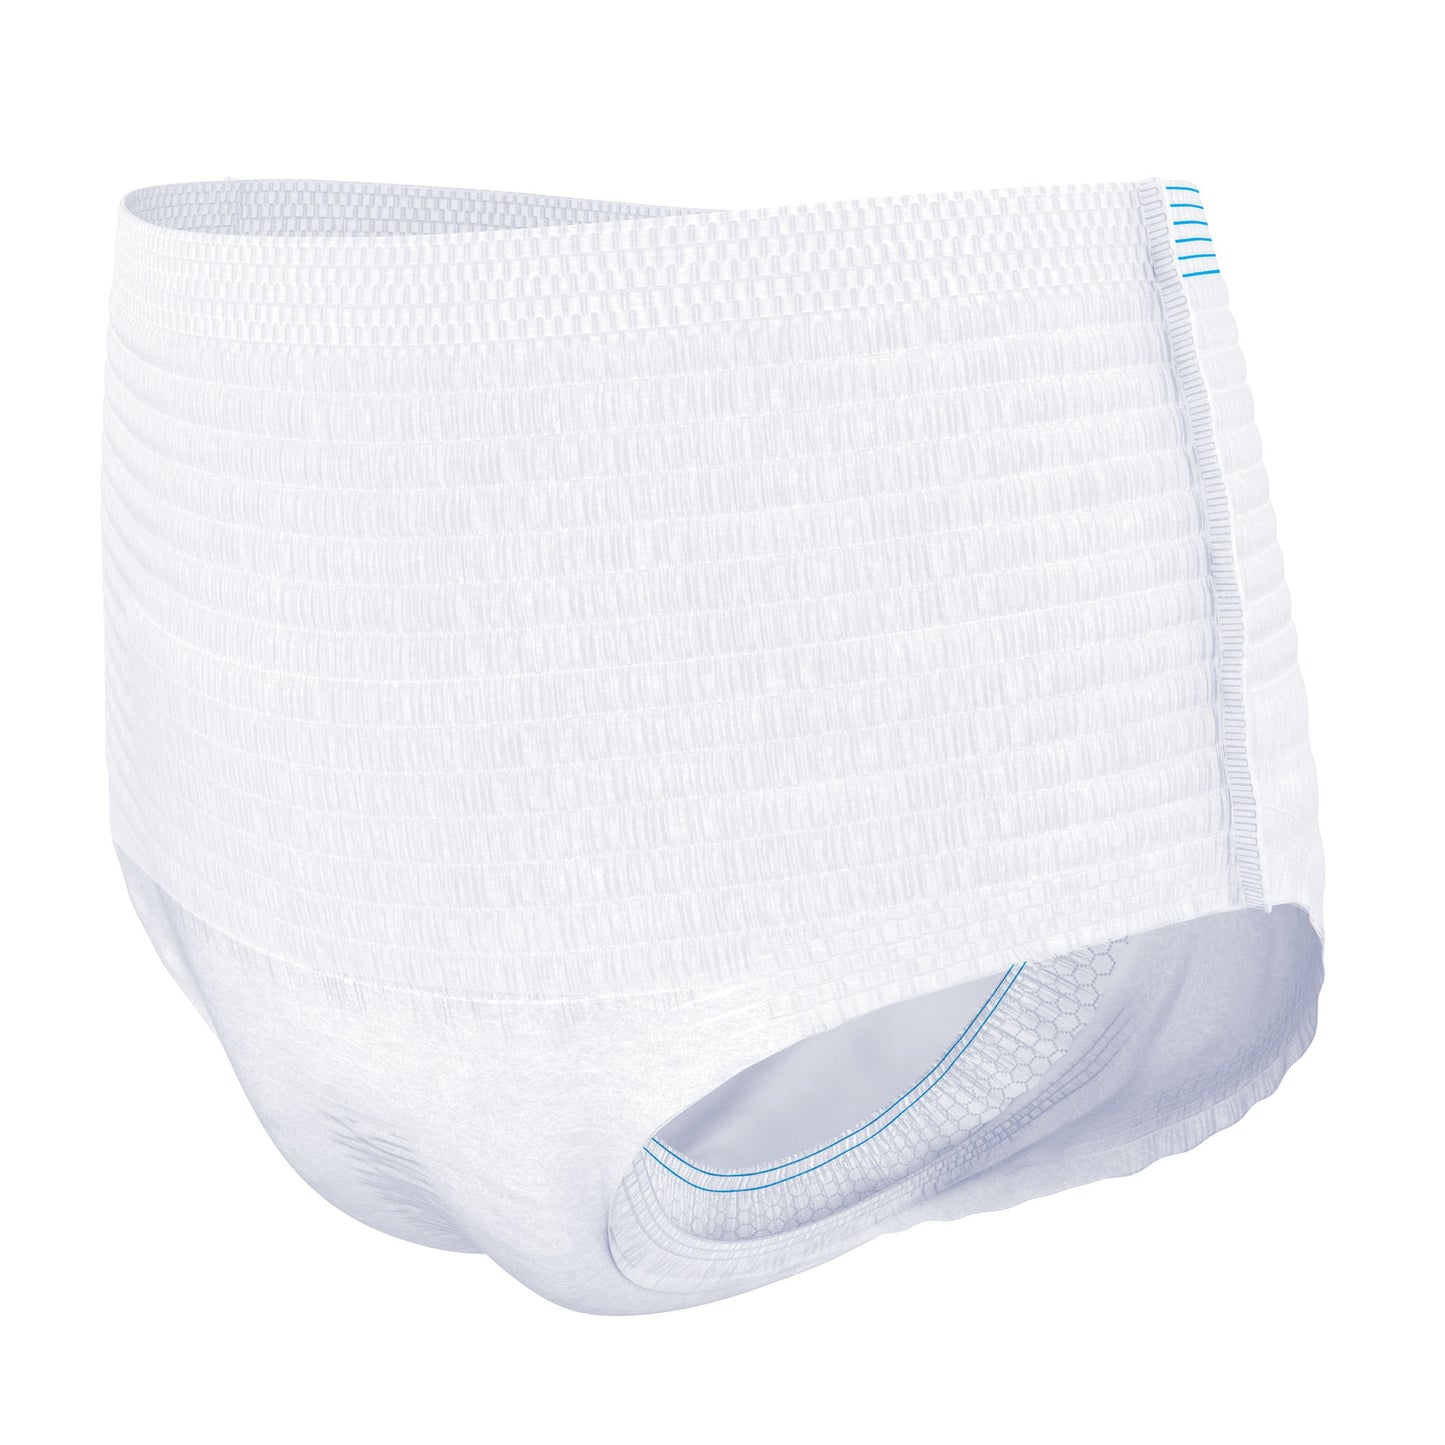 Tena Ultimate-Extra Absorbent Underwear, Medium - 72232